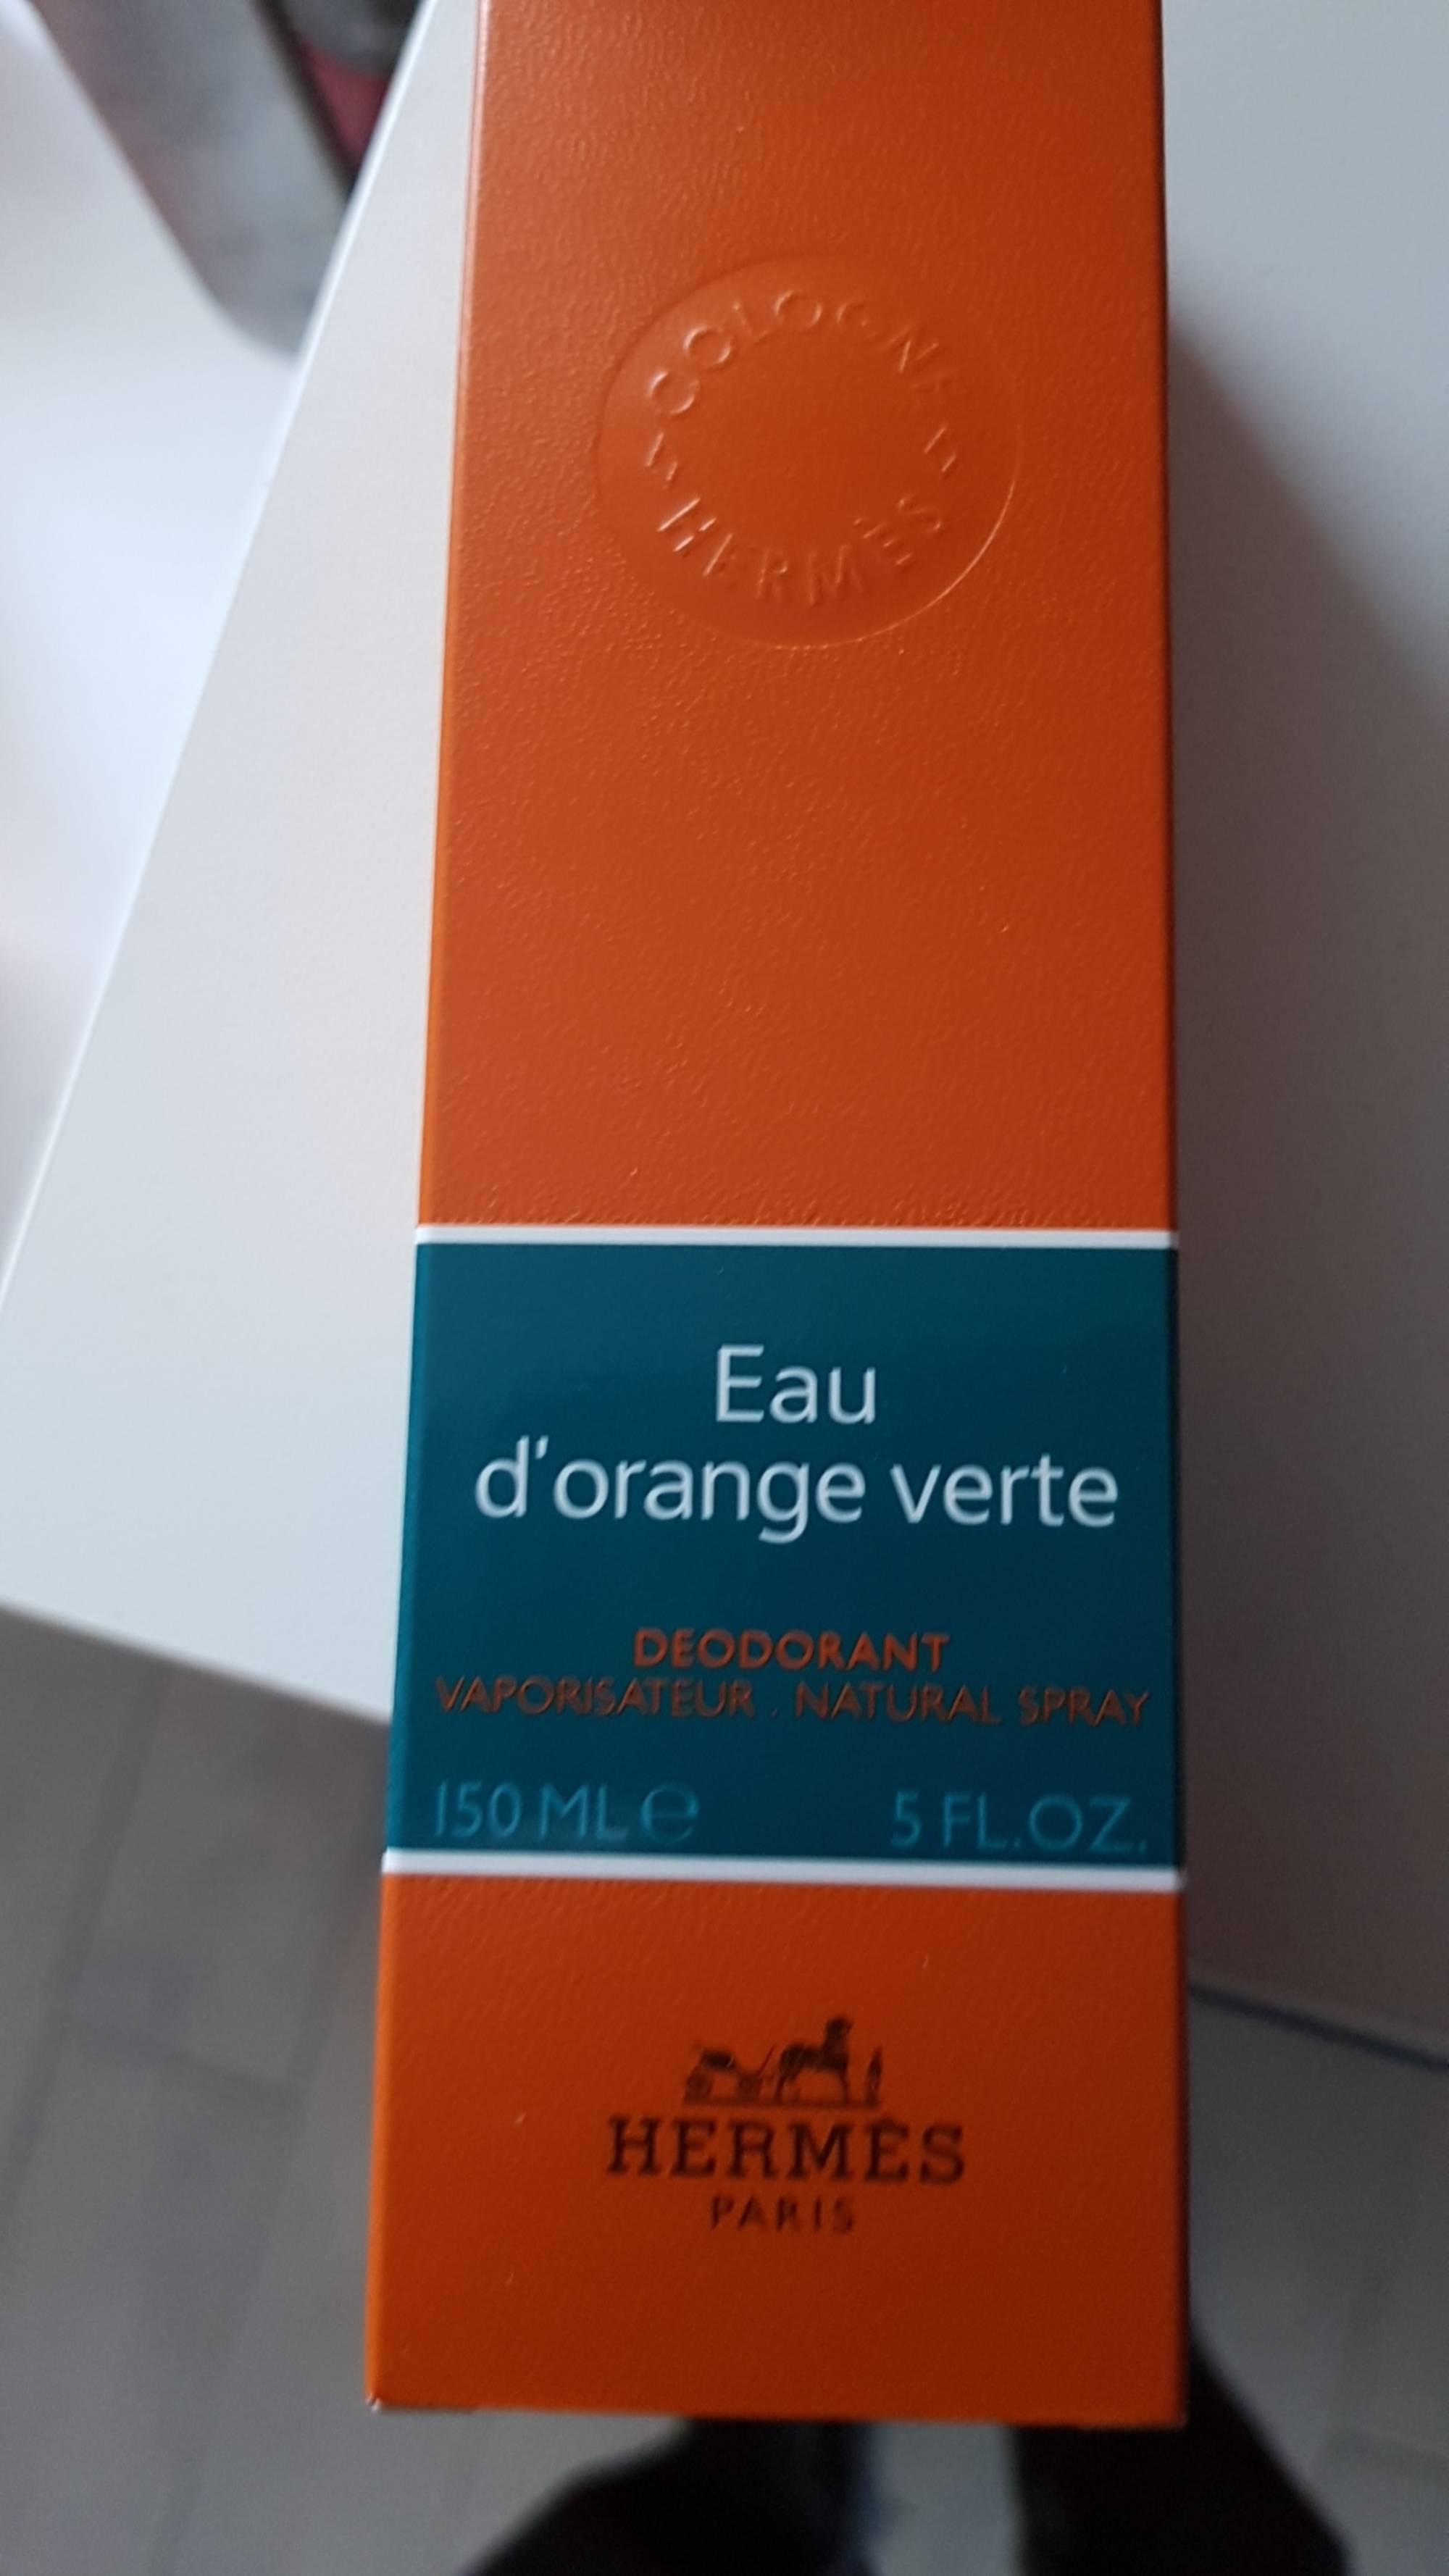 Eau d'orange verte Déodorant vaporisateur - 150 ml